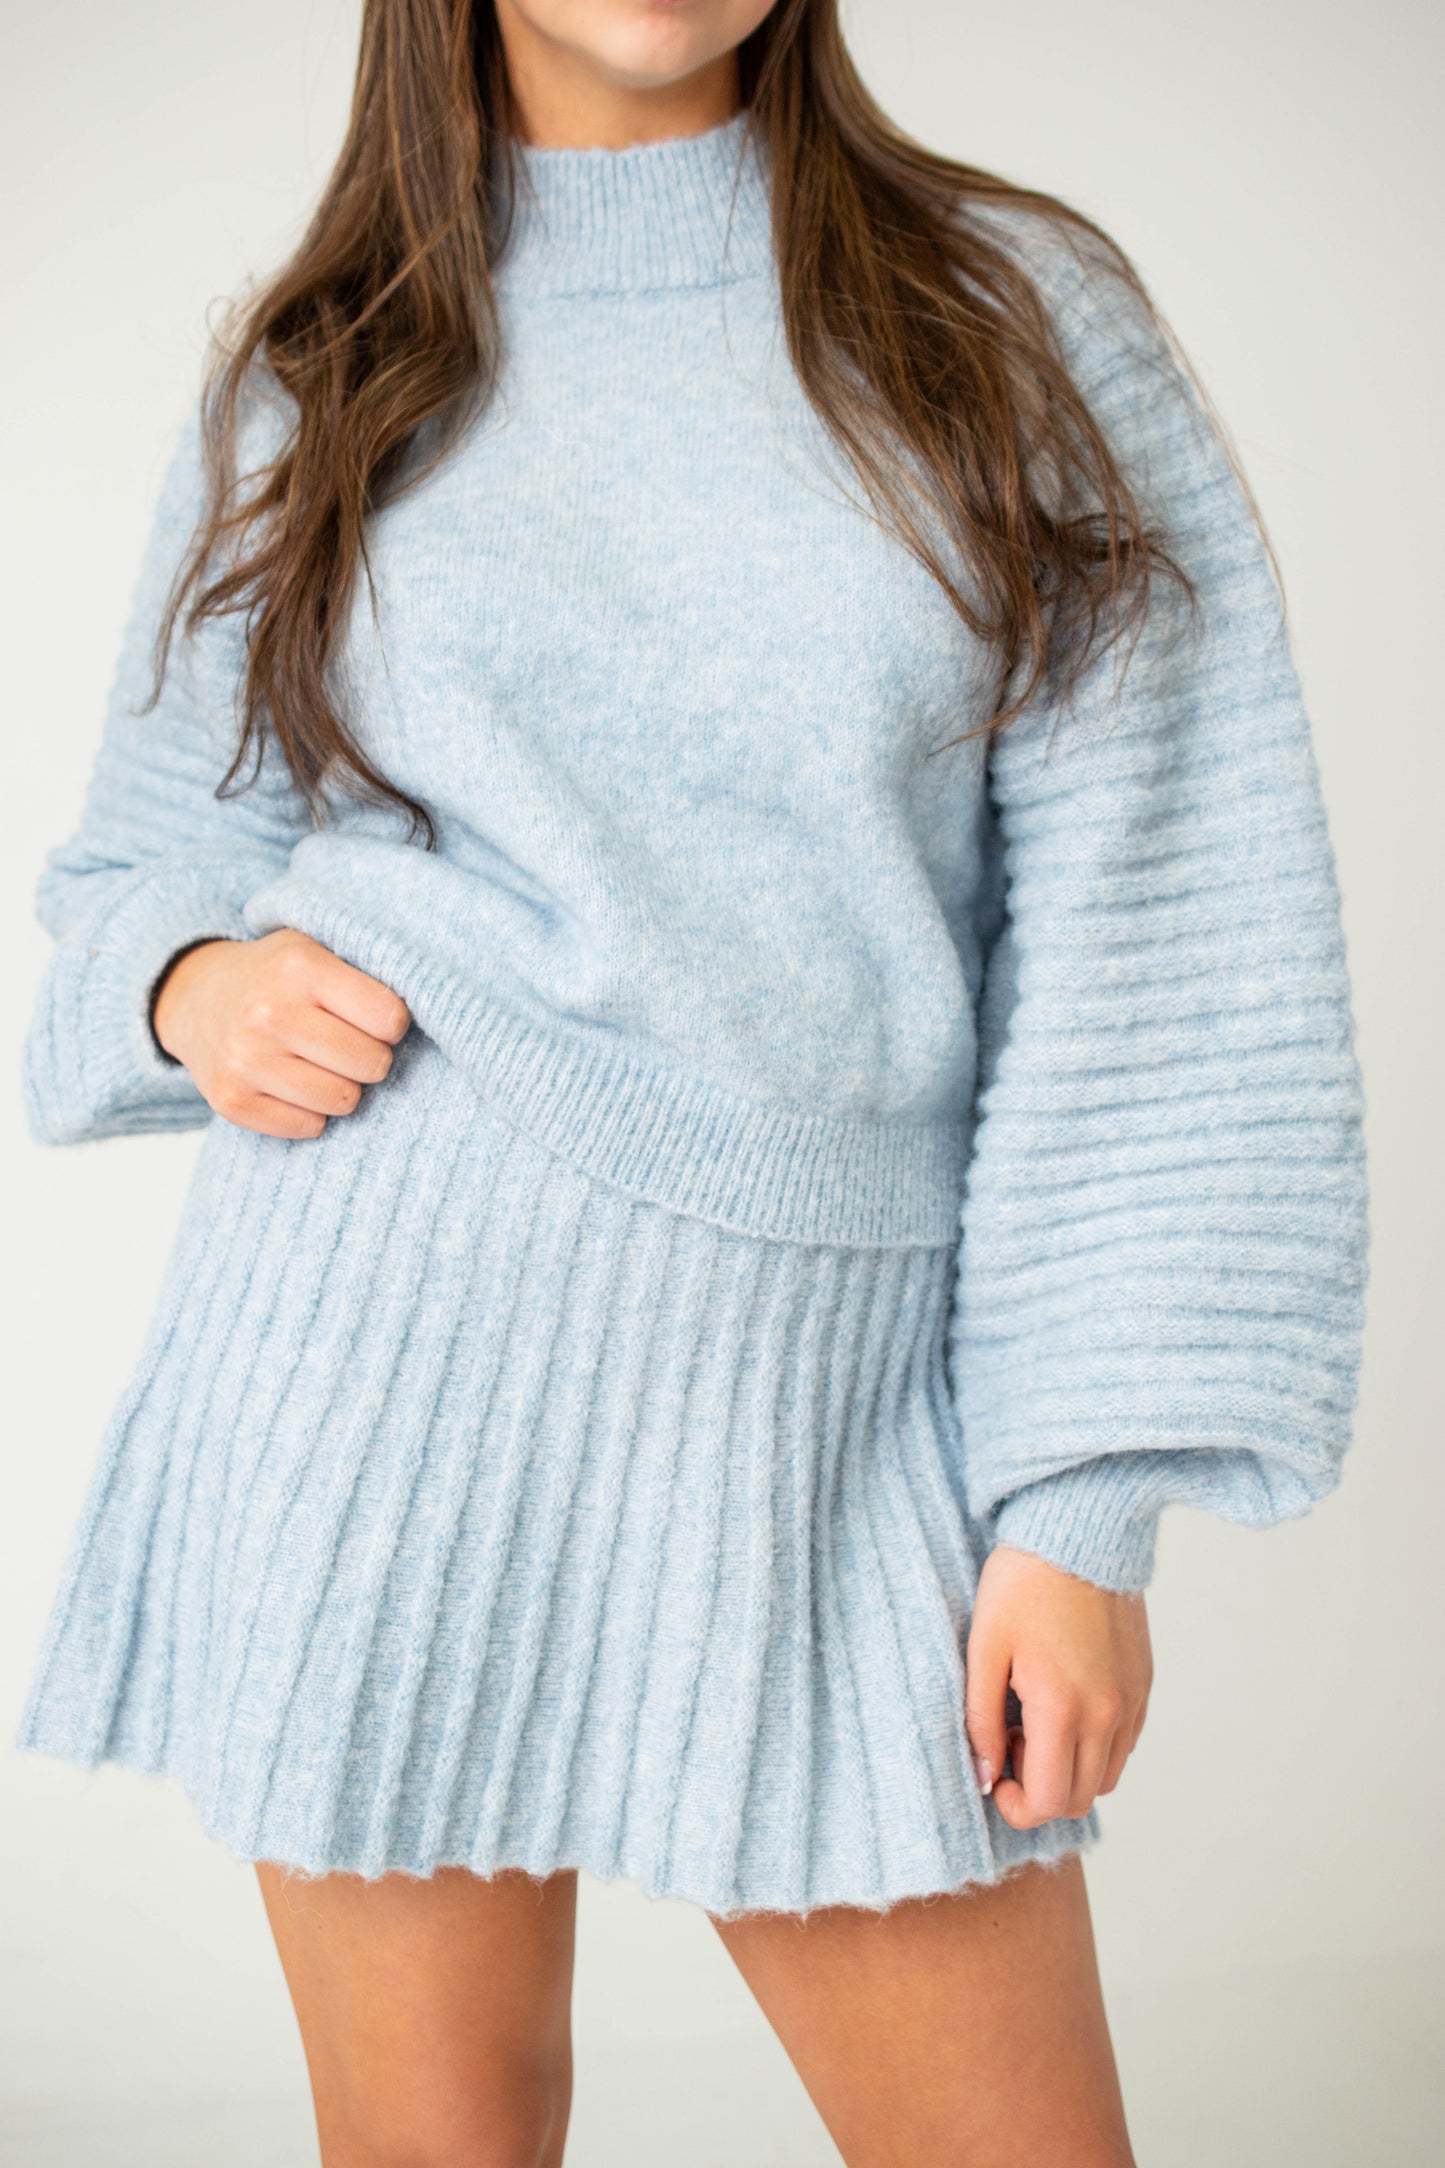 Gabriella Blue Sweater Top (part of set)